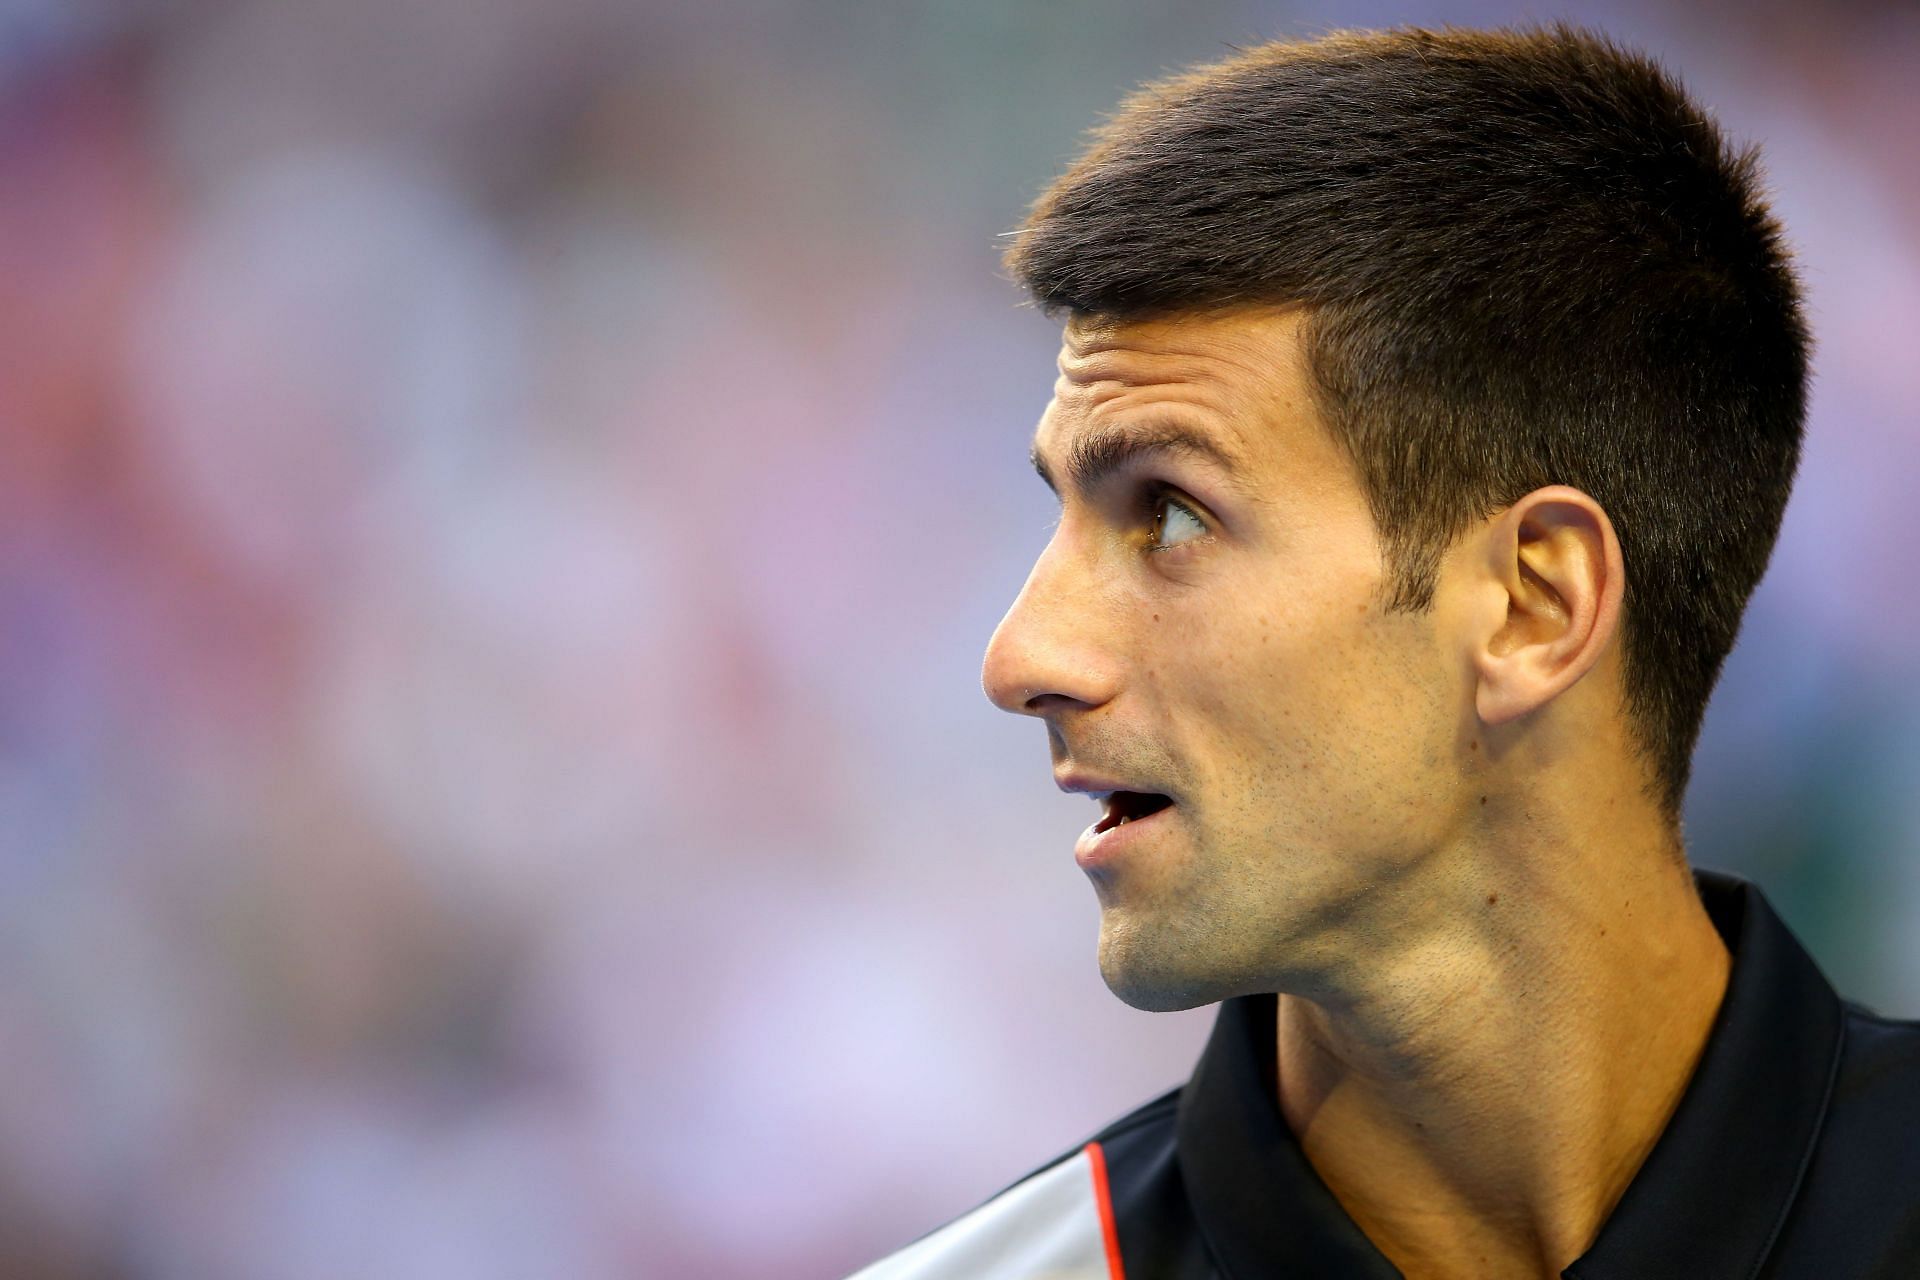 Novak Djokovic vs Stan Wawrinka in the 2014 Australian Open quarterfinal